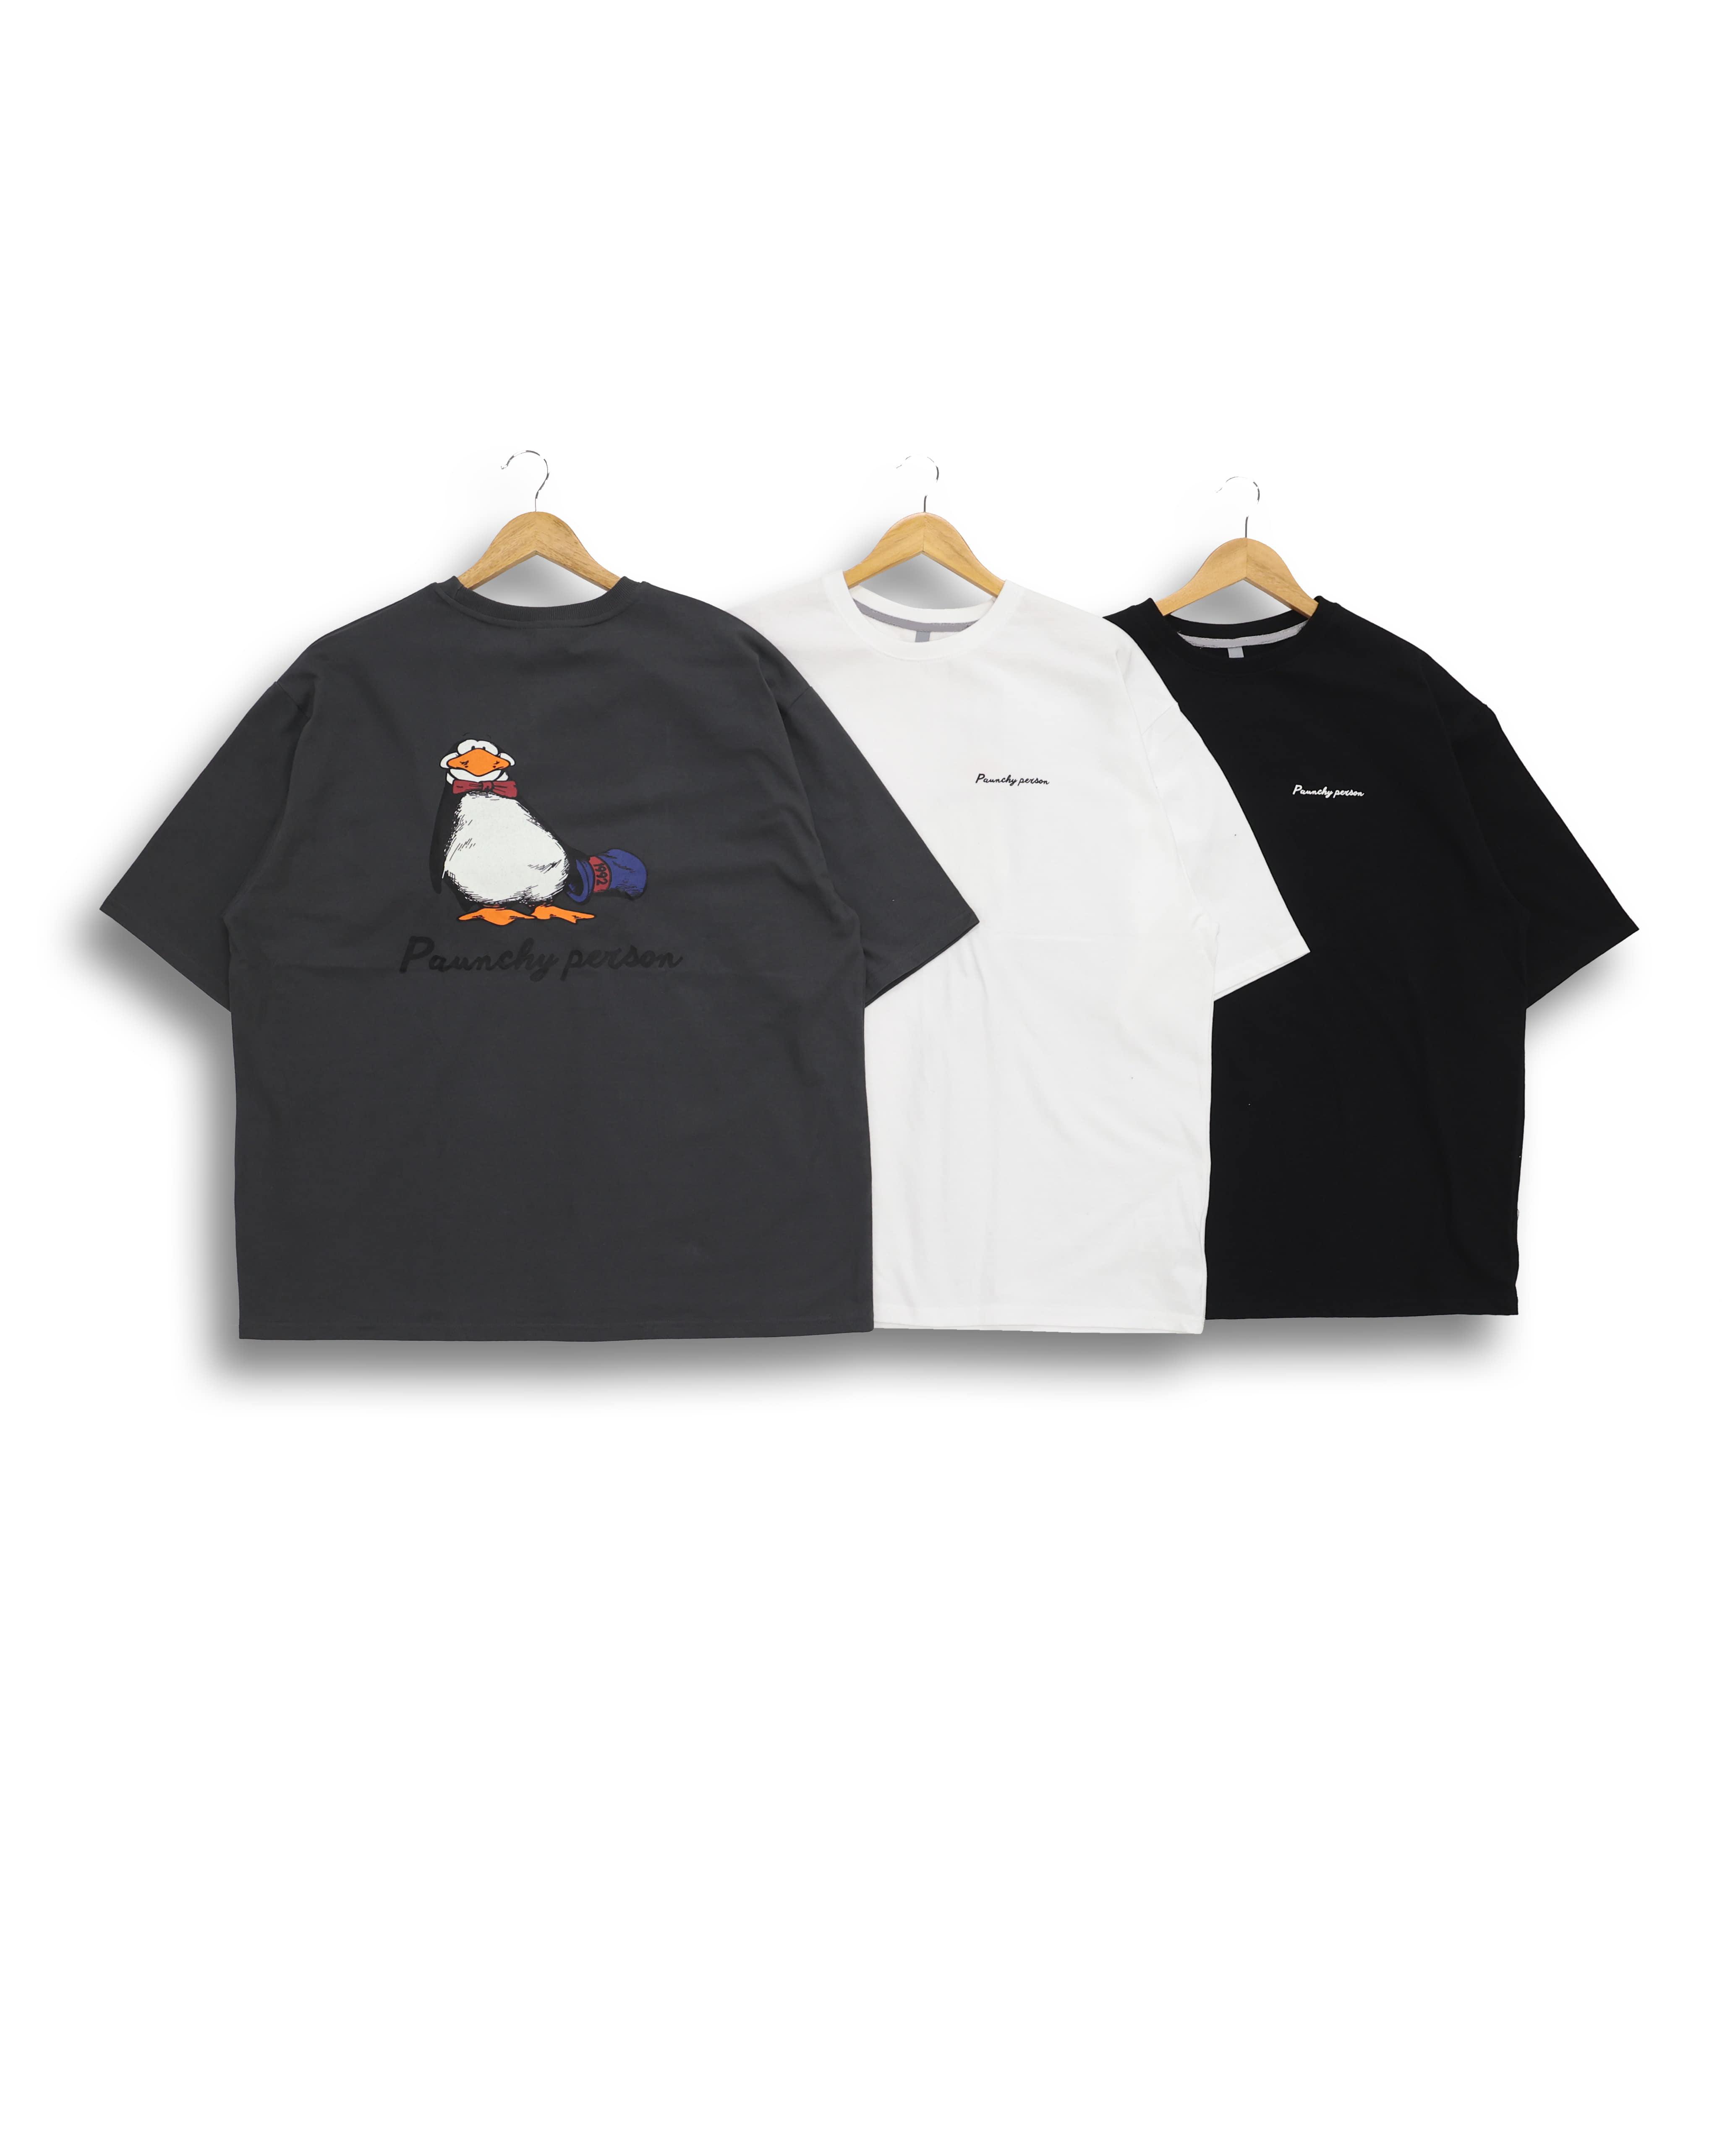 CON Oversized Big Penguin T Shirts (Black/Charcoal/White)